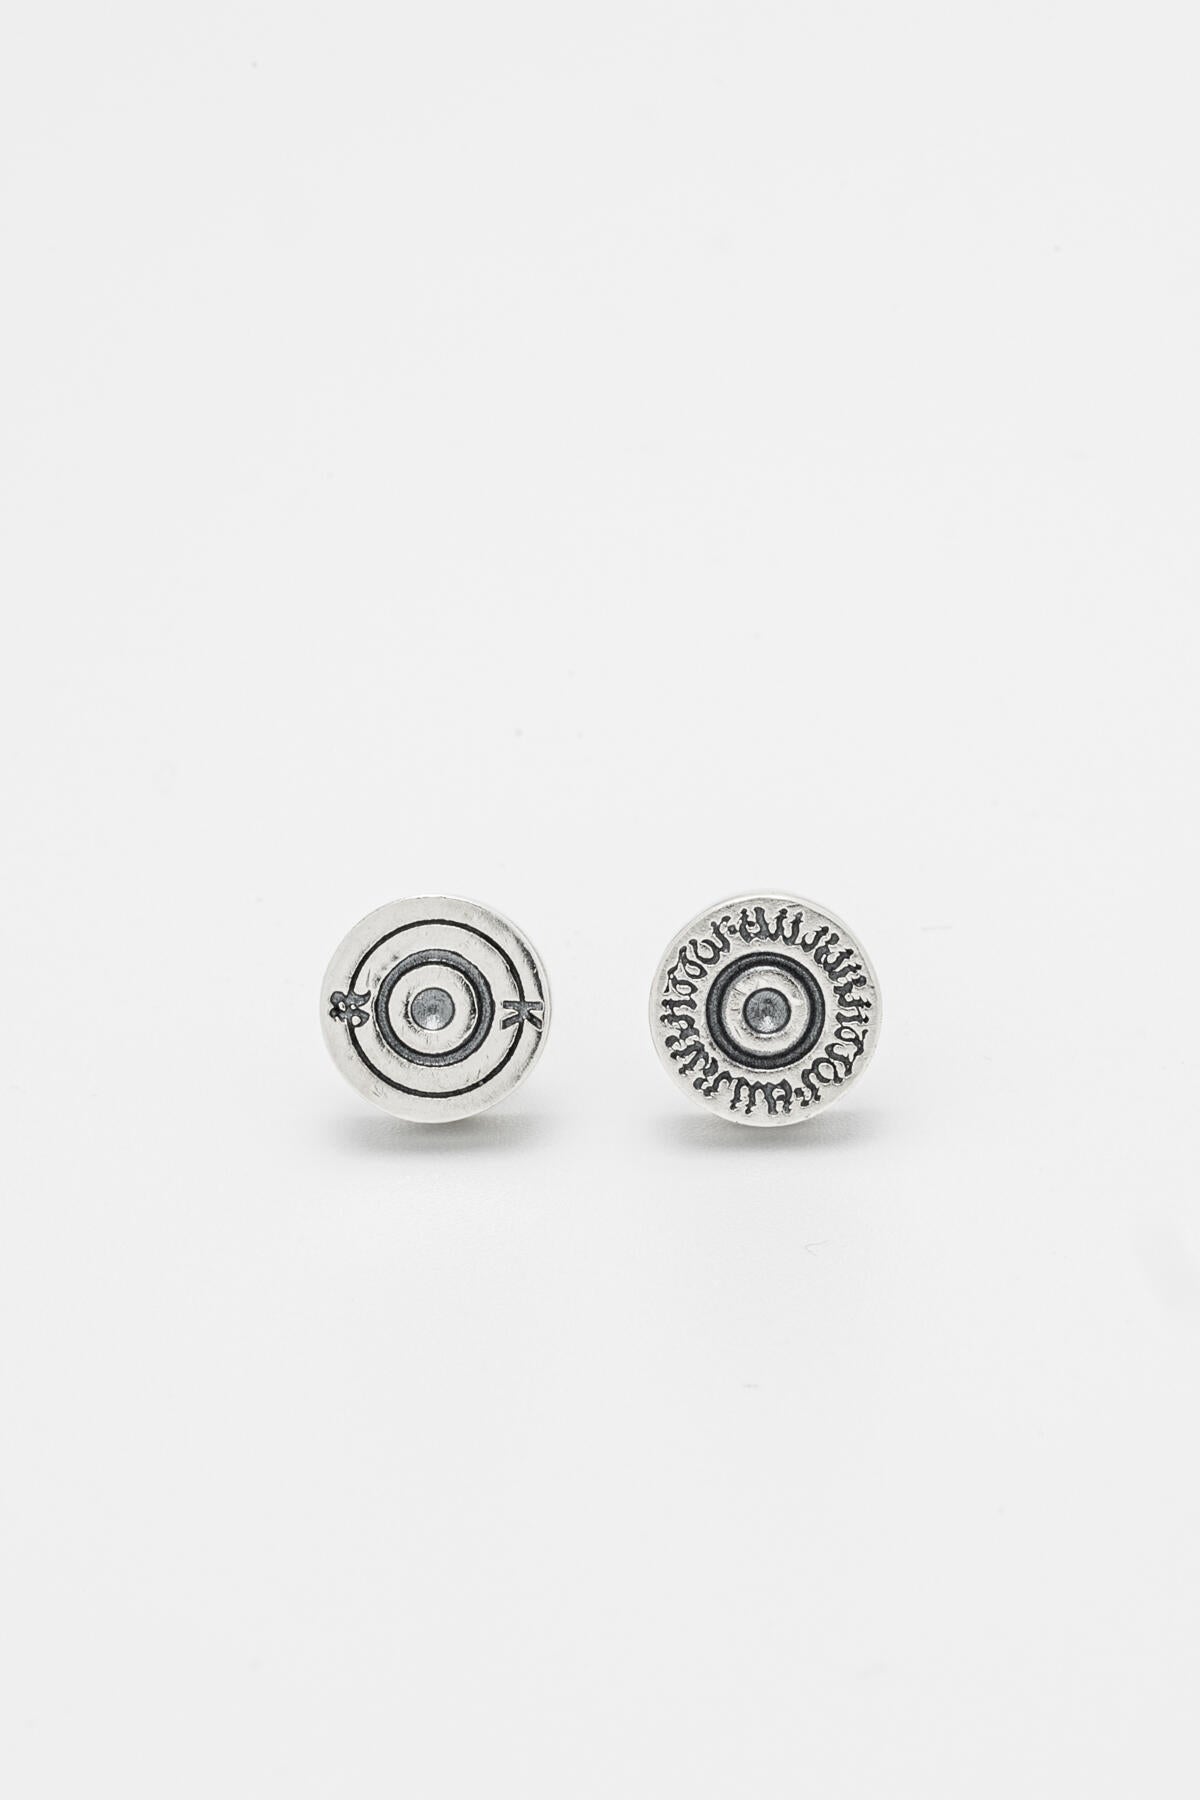 B213_Bullet Button Earring Set_L_02